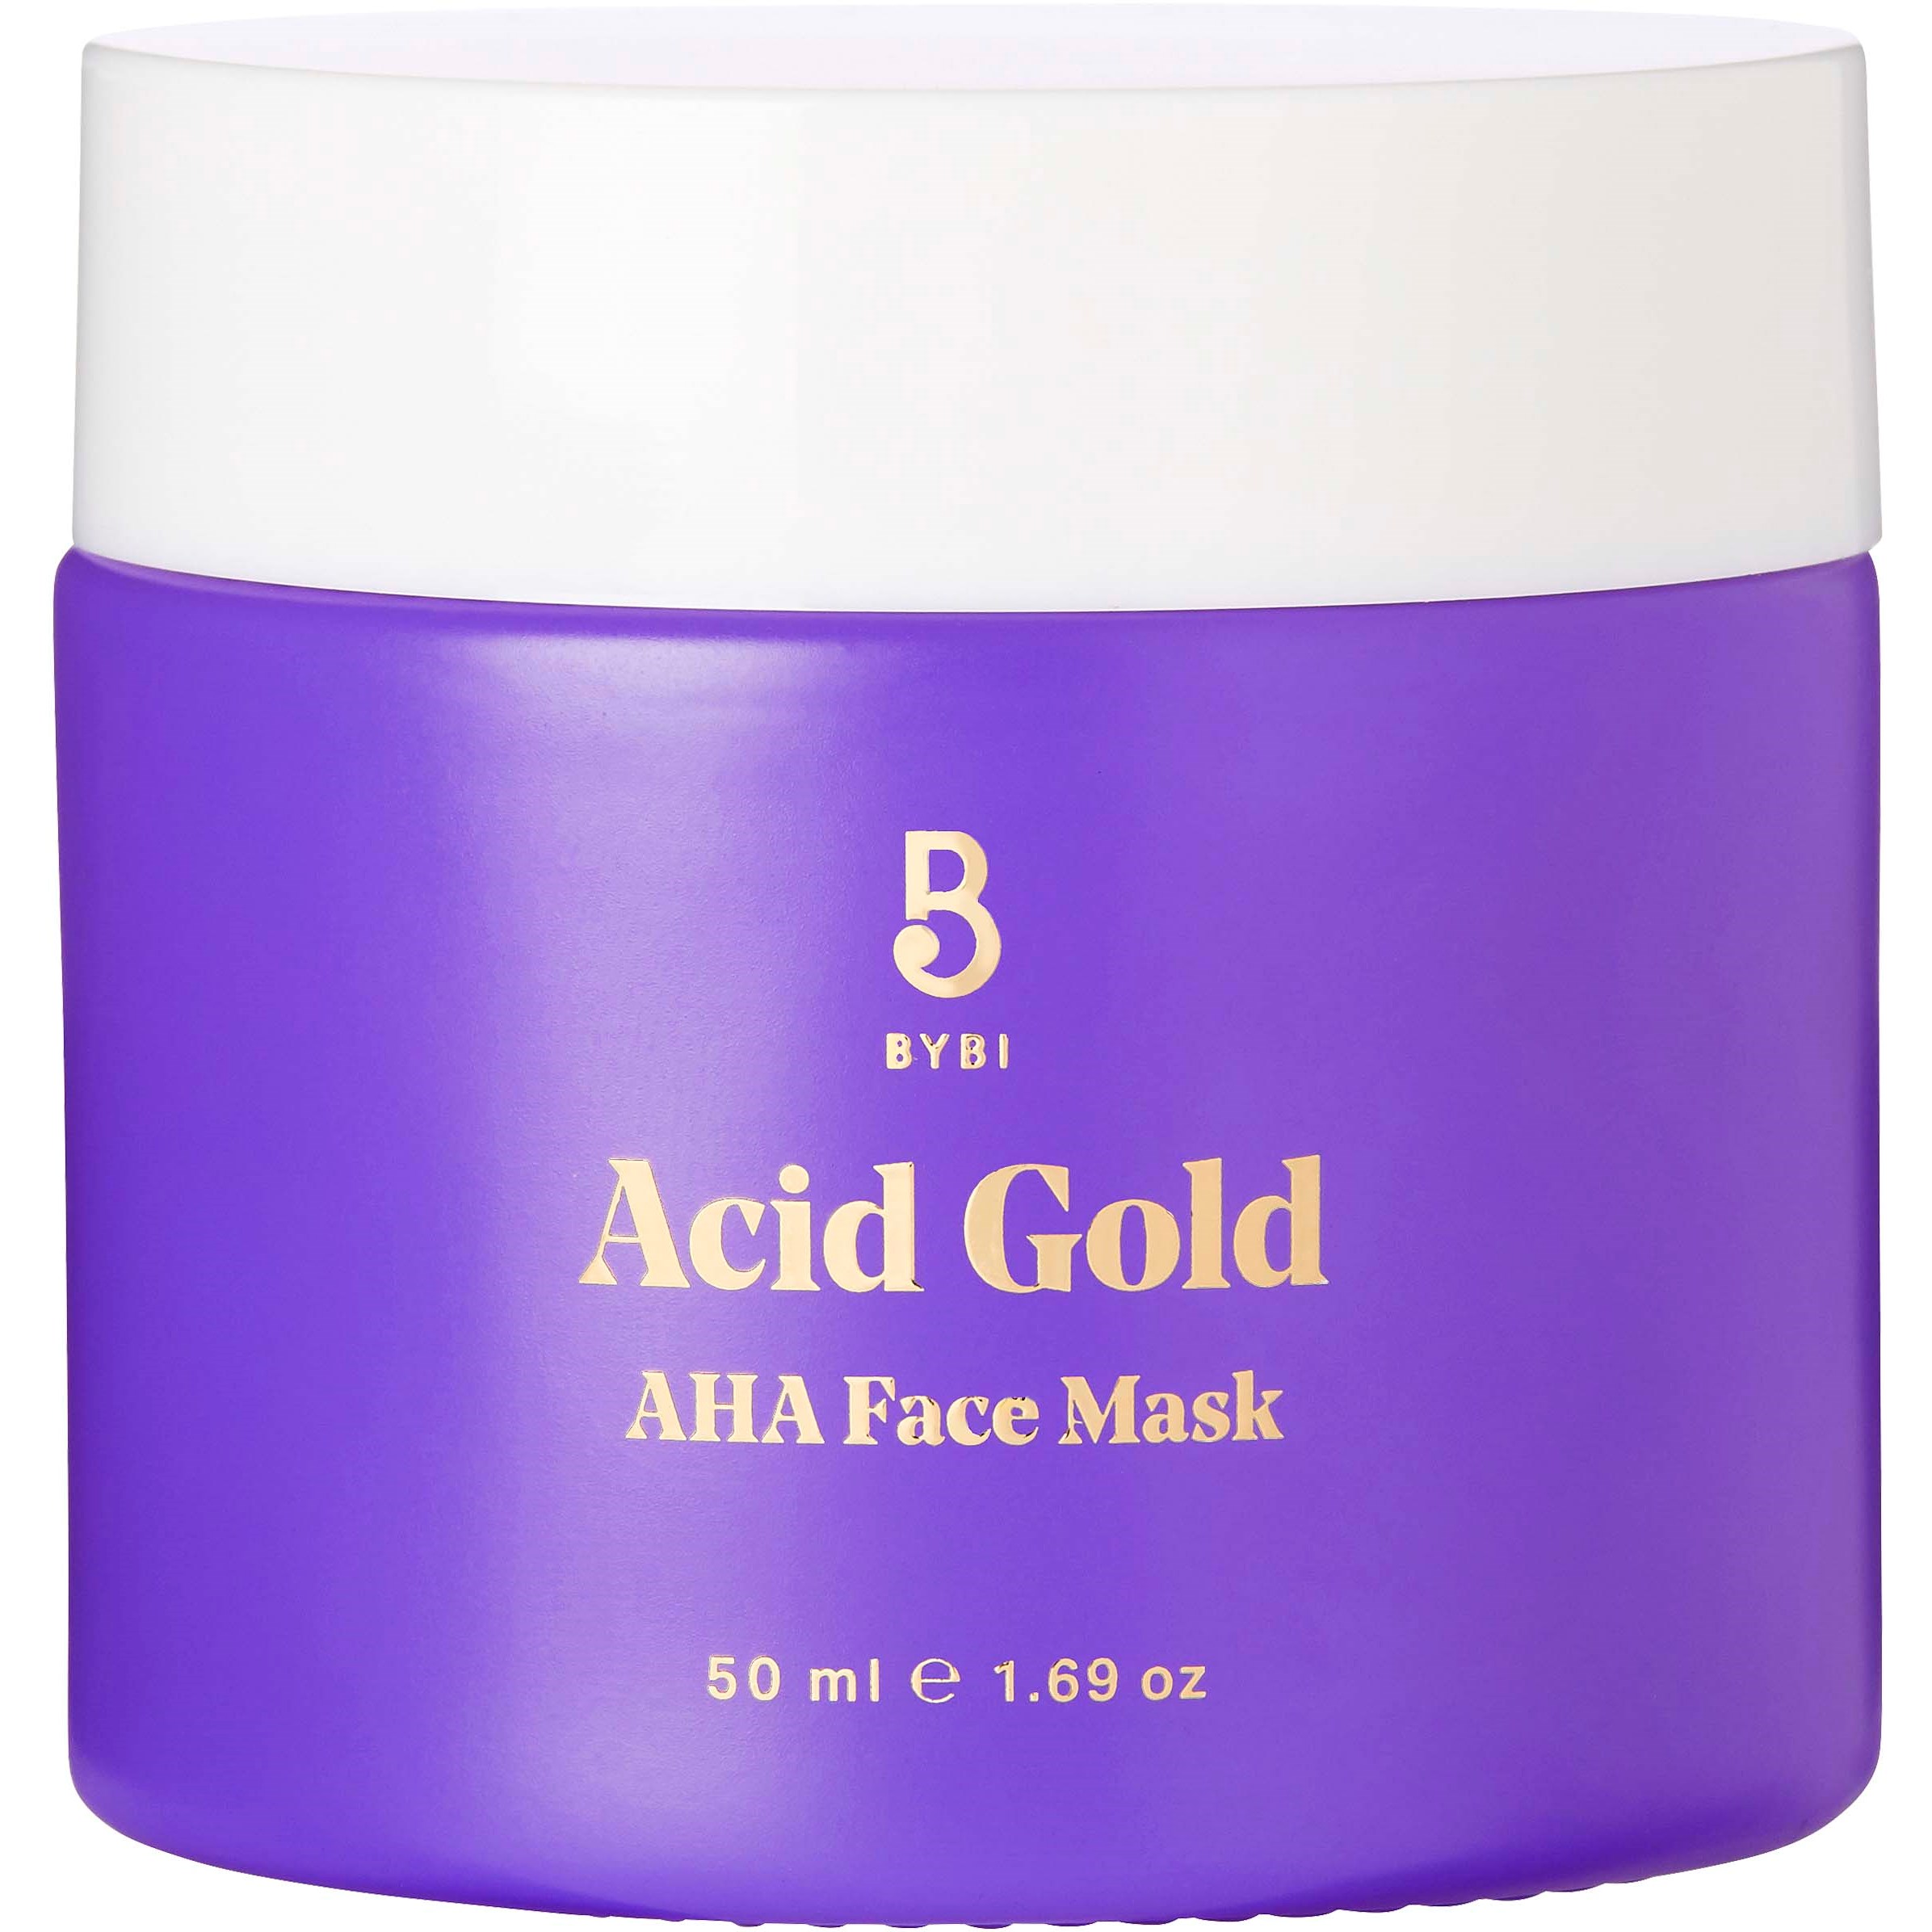 BYBI Beauty Acid Gold AHA Face Mask, 50 ml